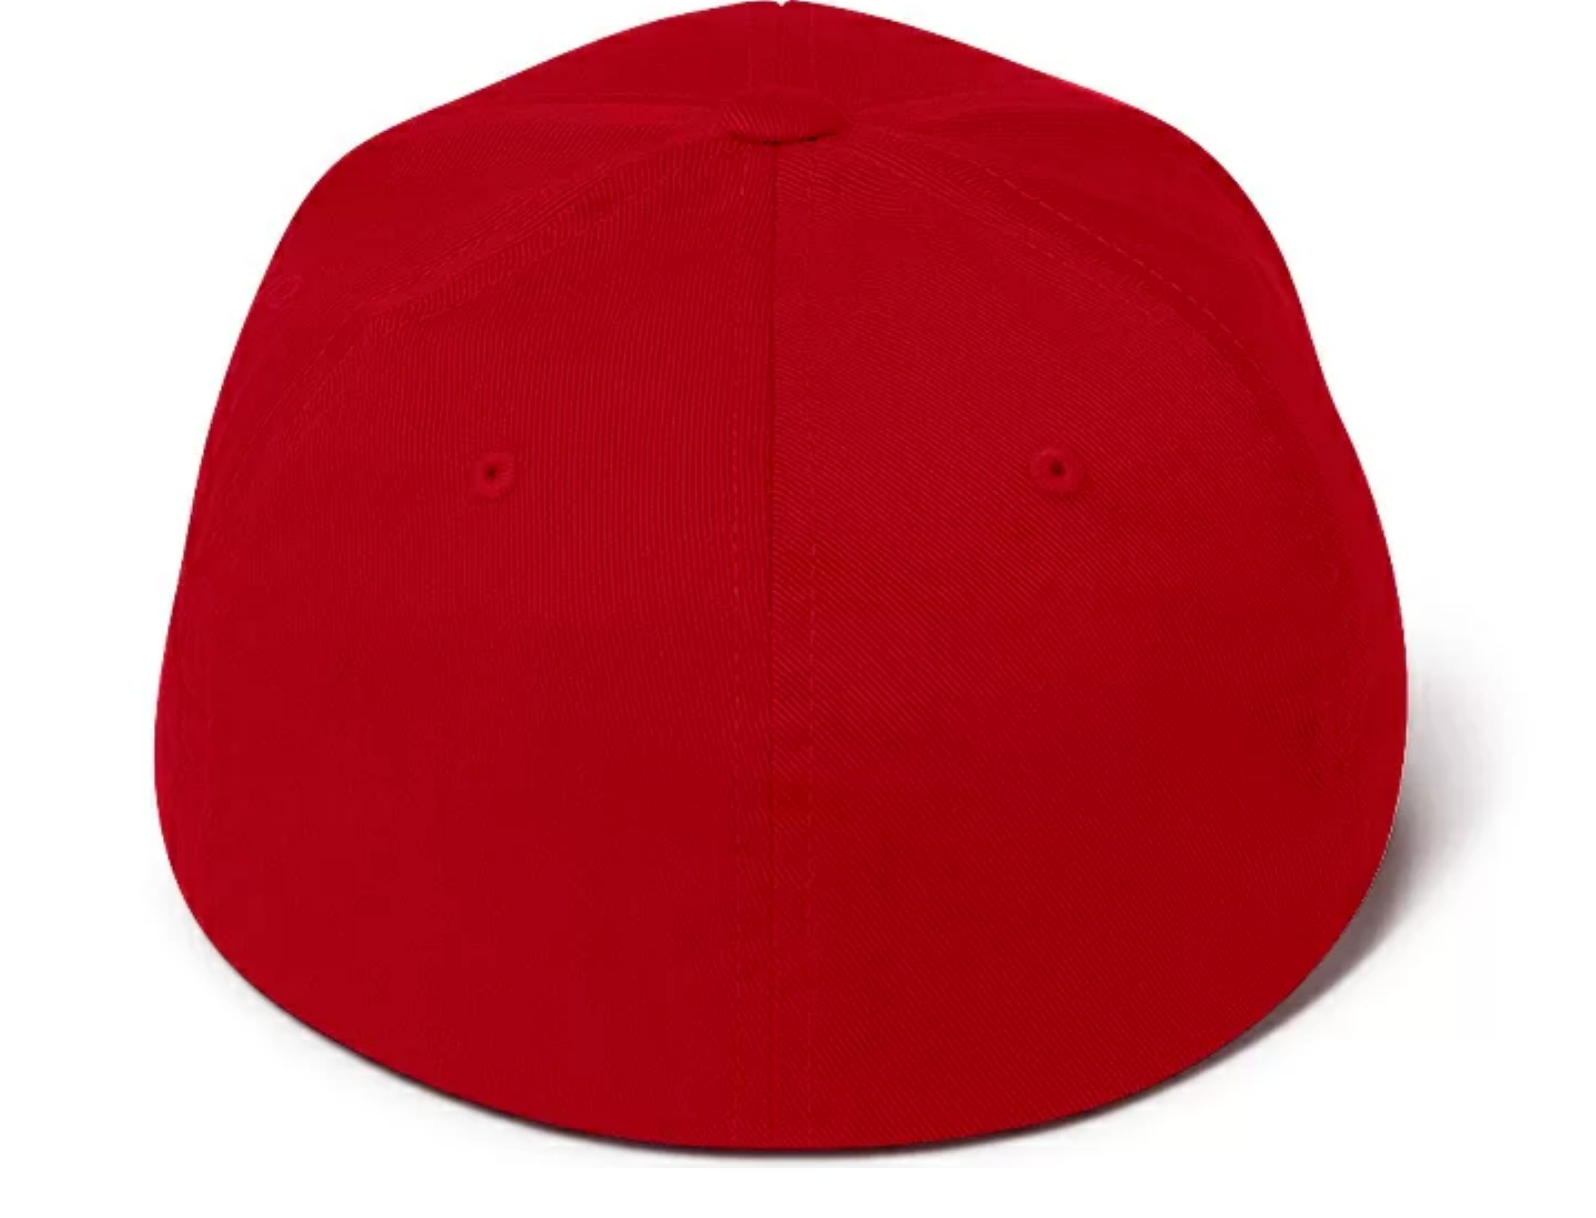 niki cap niki lauda f1 design cap for sale